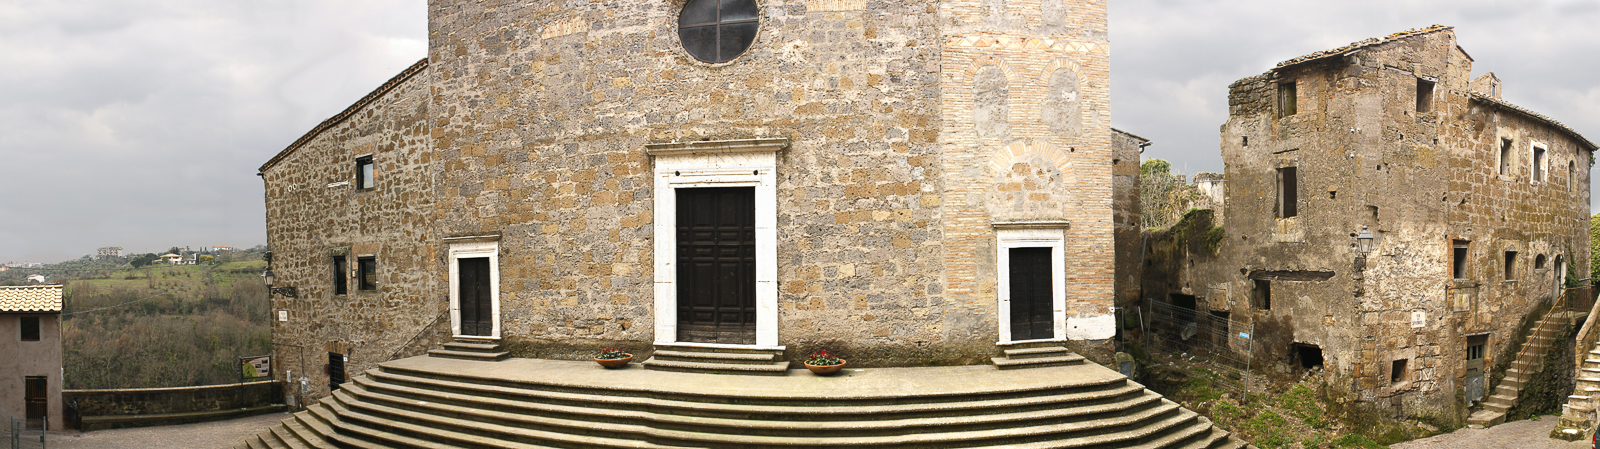 Chiesa San Giuliano-34.jpg